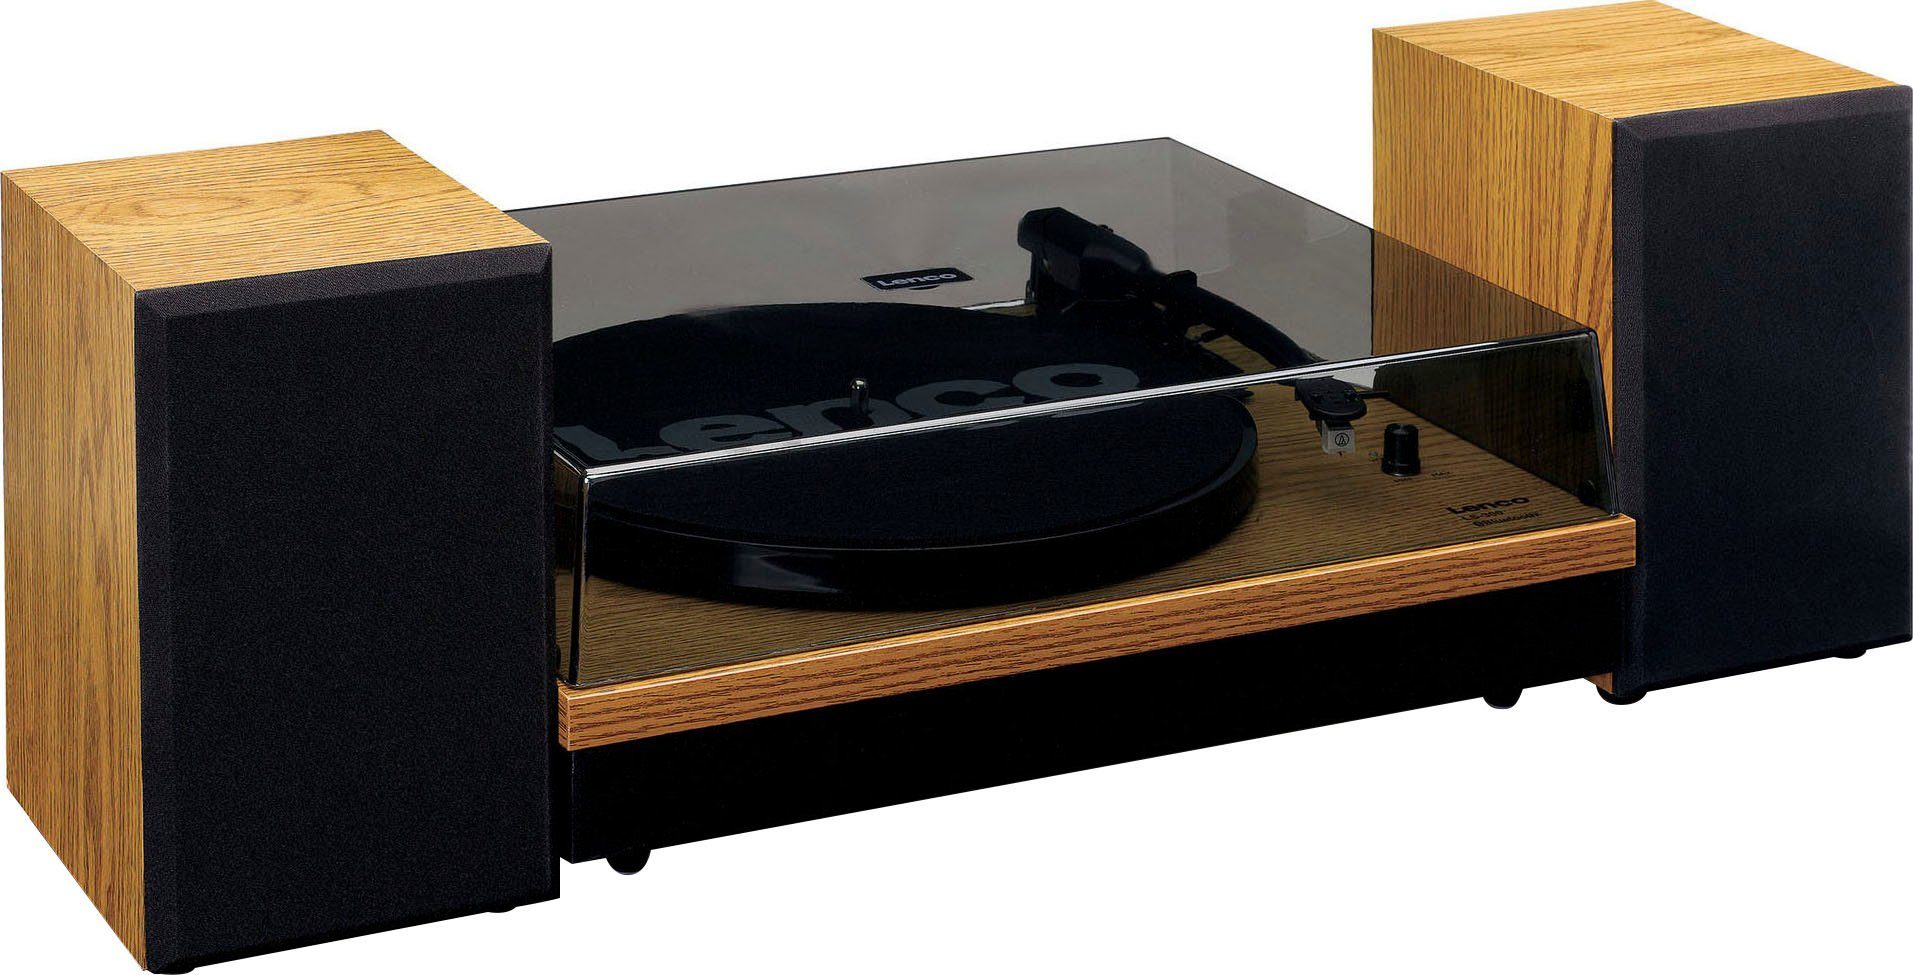 Plattenspieler ext. Lenco Plattenspieler (Riemenantrieb) Lautsprechern Holz mit LS-300WD